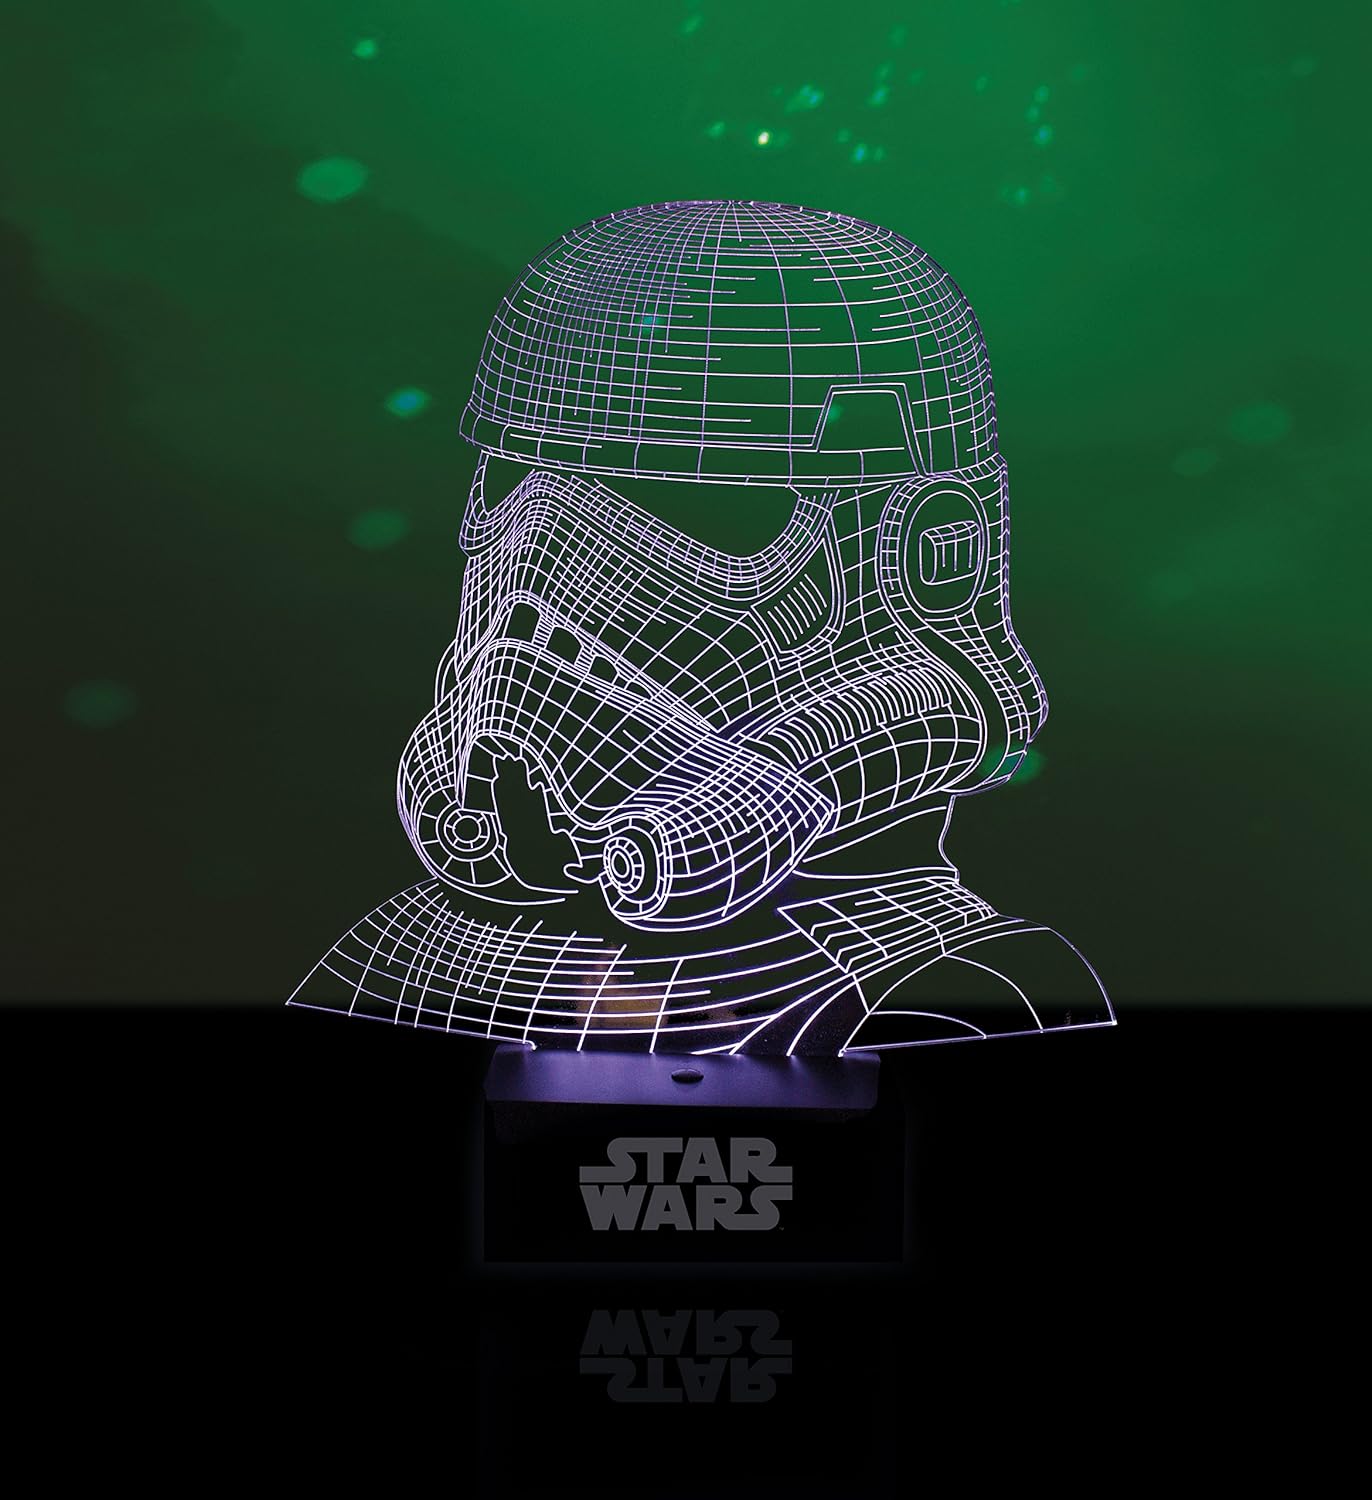 Star Wars Stormtrooper Acrylic Led Light